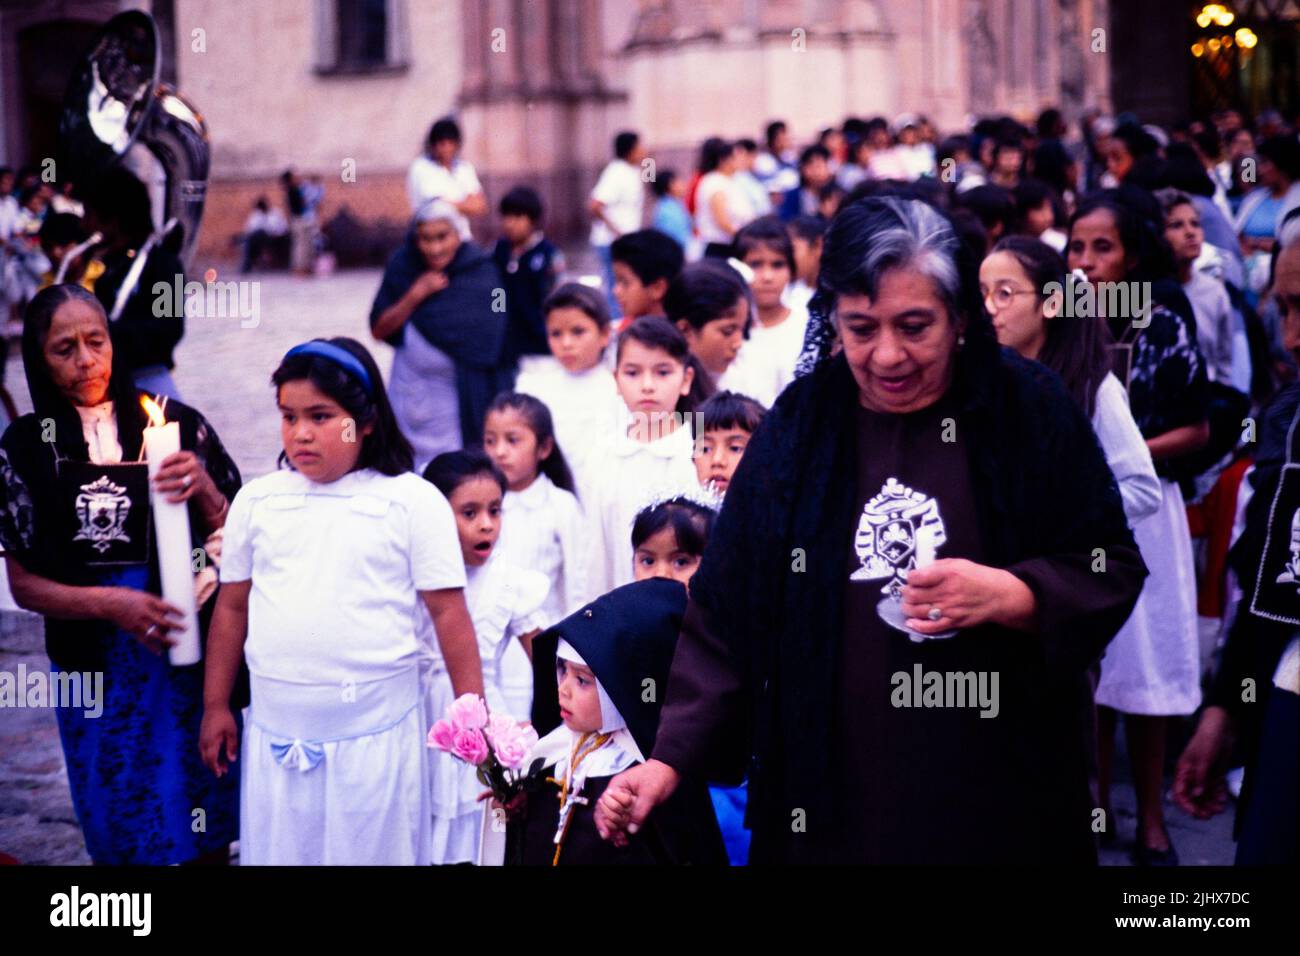 Religiöse Prozession bei Kerzenschein Kirche La Parroquia, San Migeul de Allende, Mexiko c 1990 Stockfoto